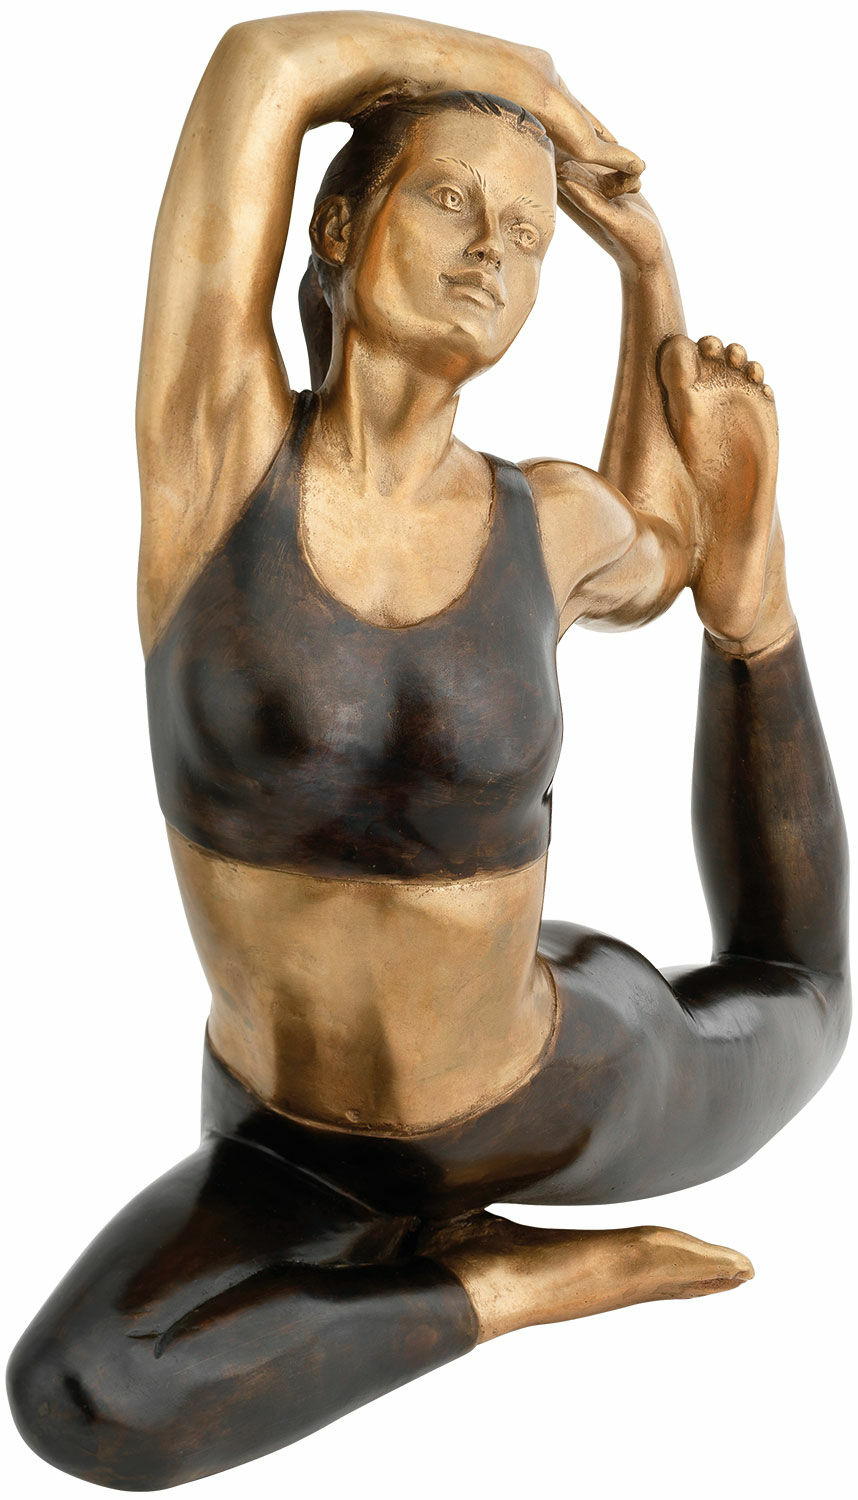 Sculpture "Mindfulness" (2021), bronze by Richard Senoner